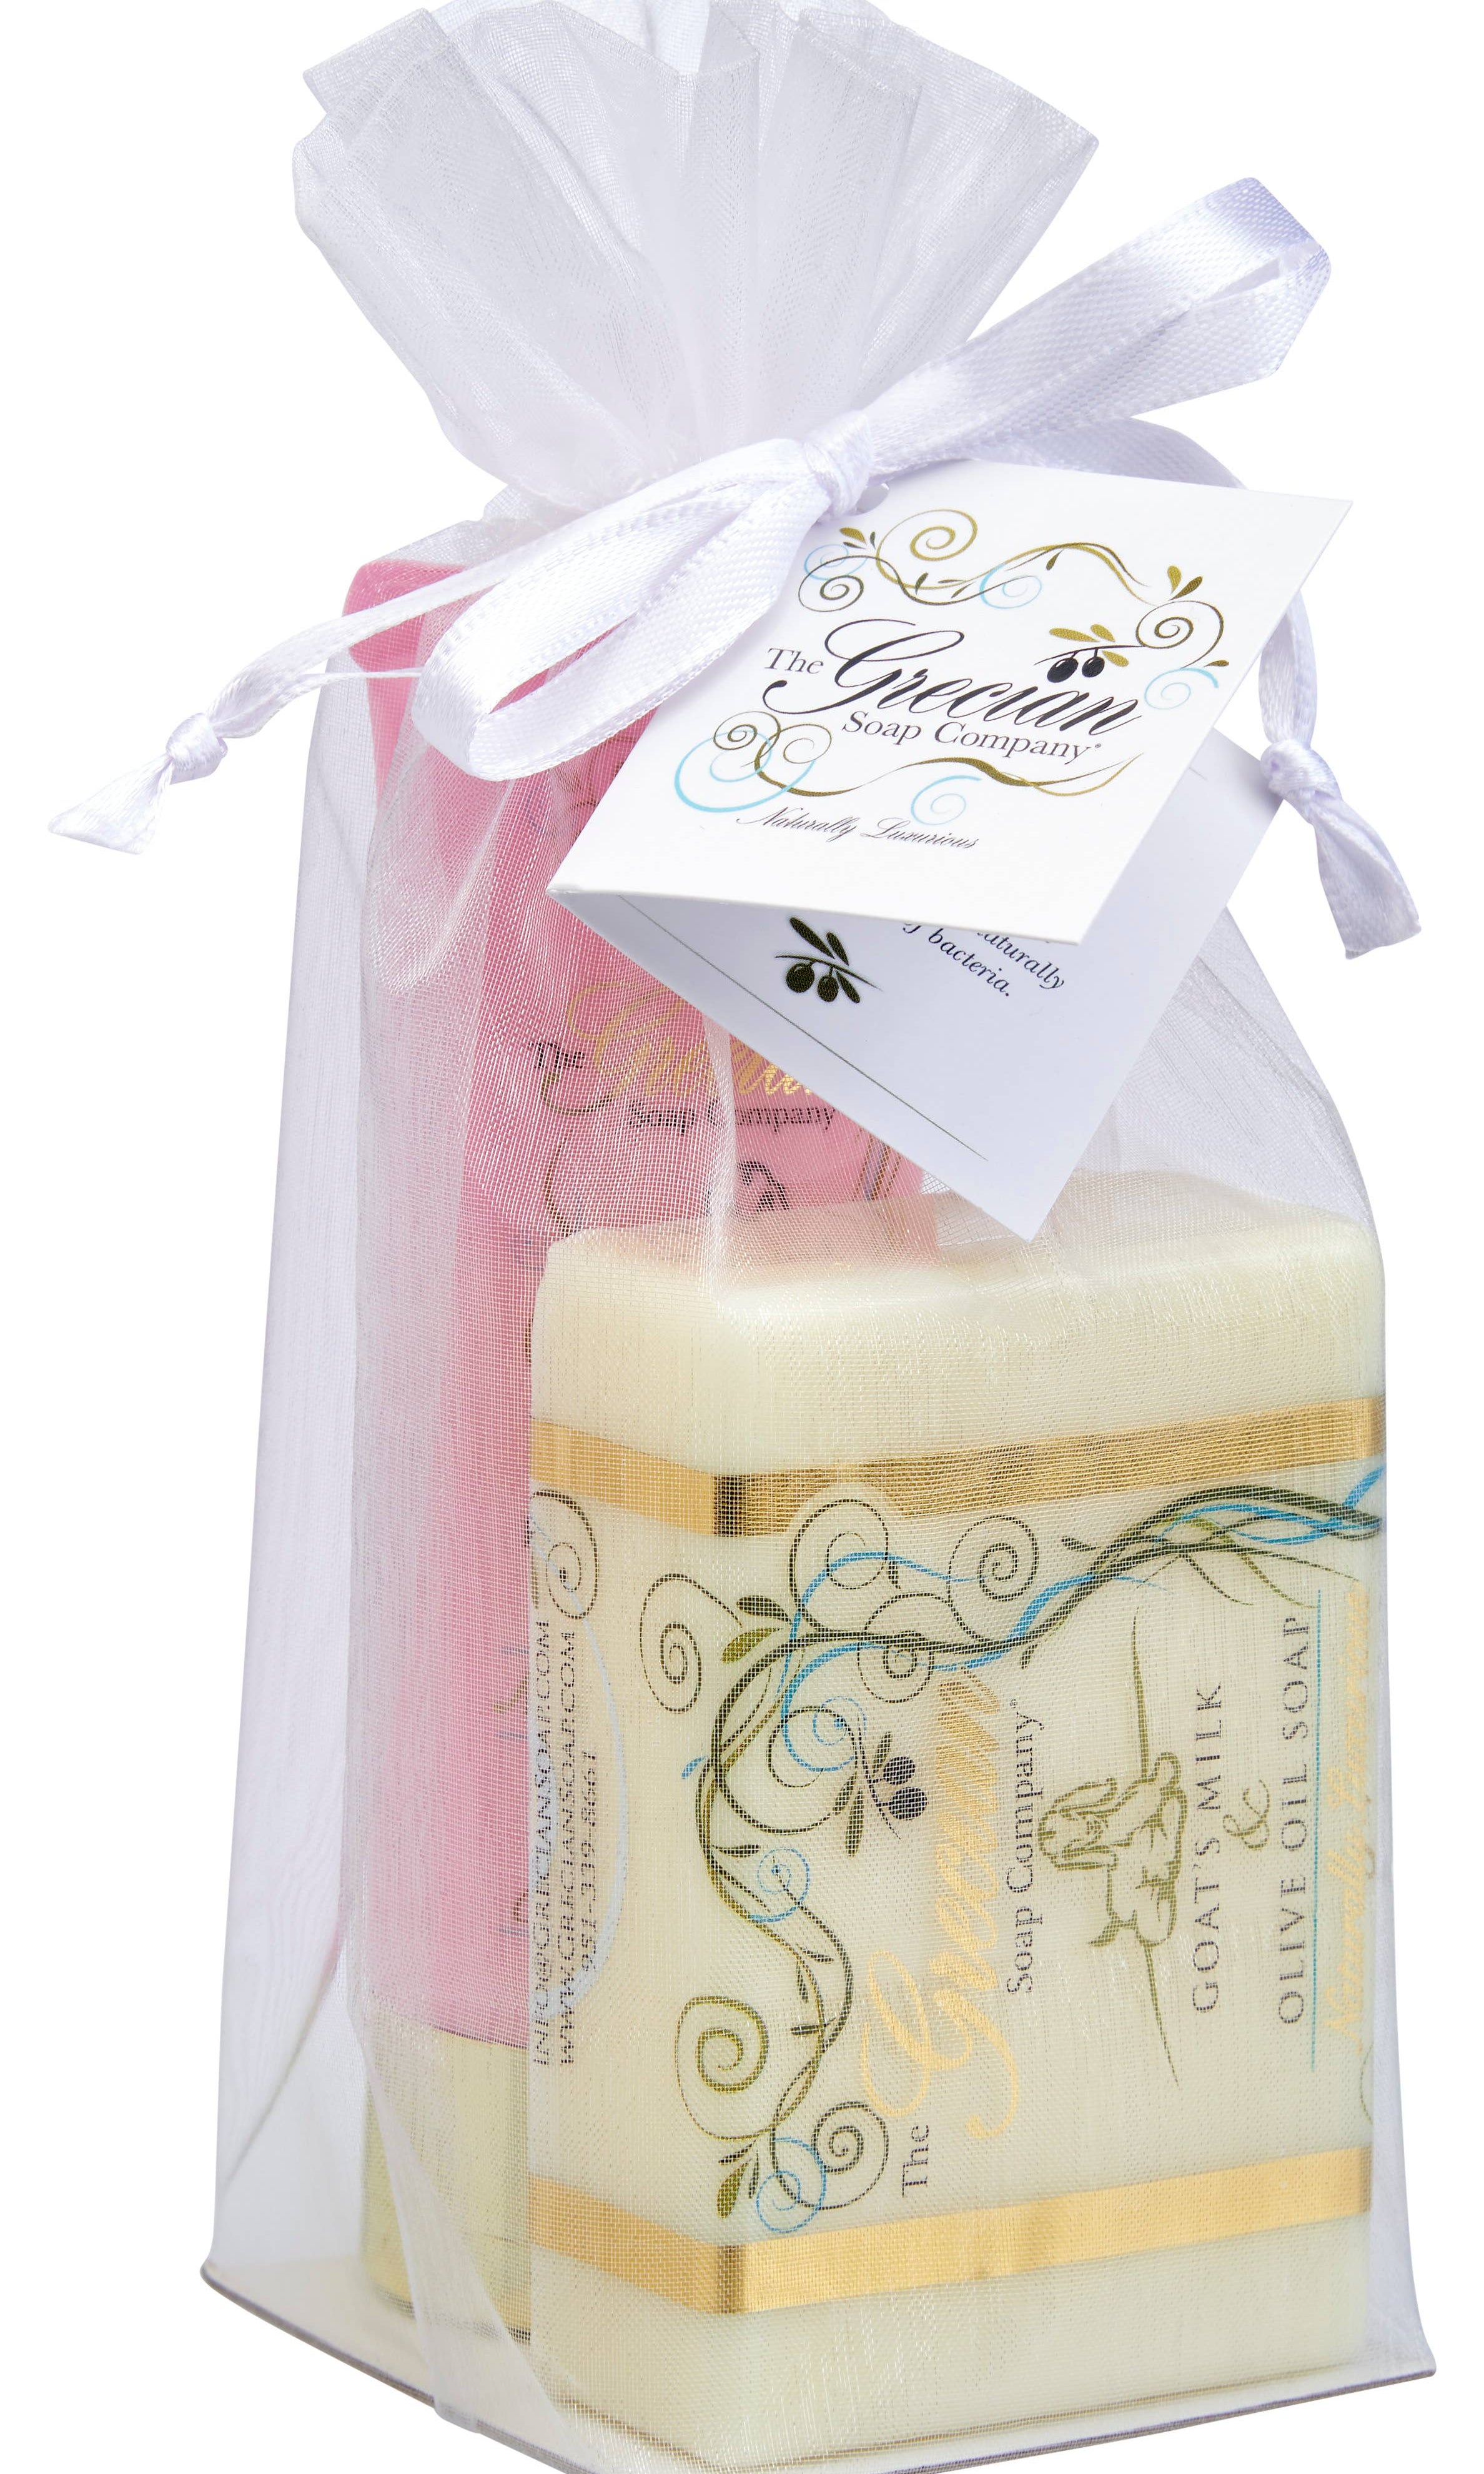 Goat's Milk Soap and Lotion Gift Set: Black Raspberry Vanilla    hand soap The Grecian Soap Company- Tilden Co.